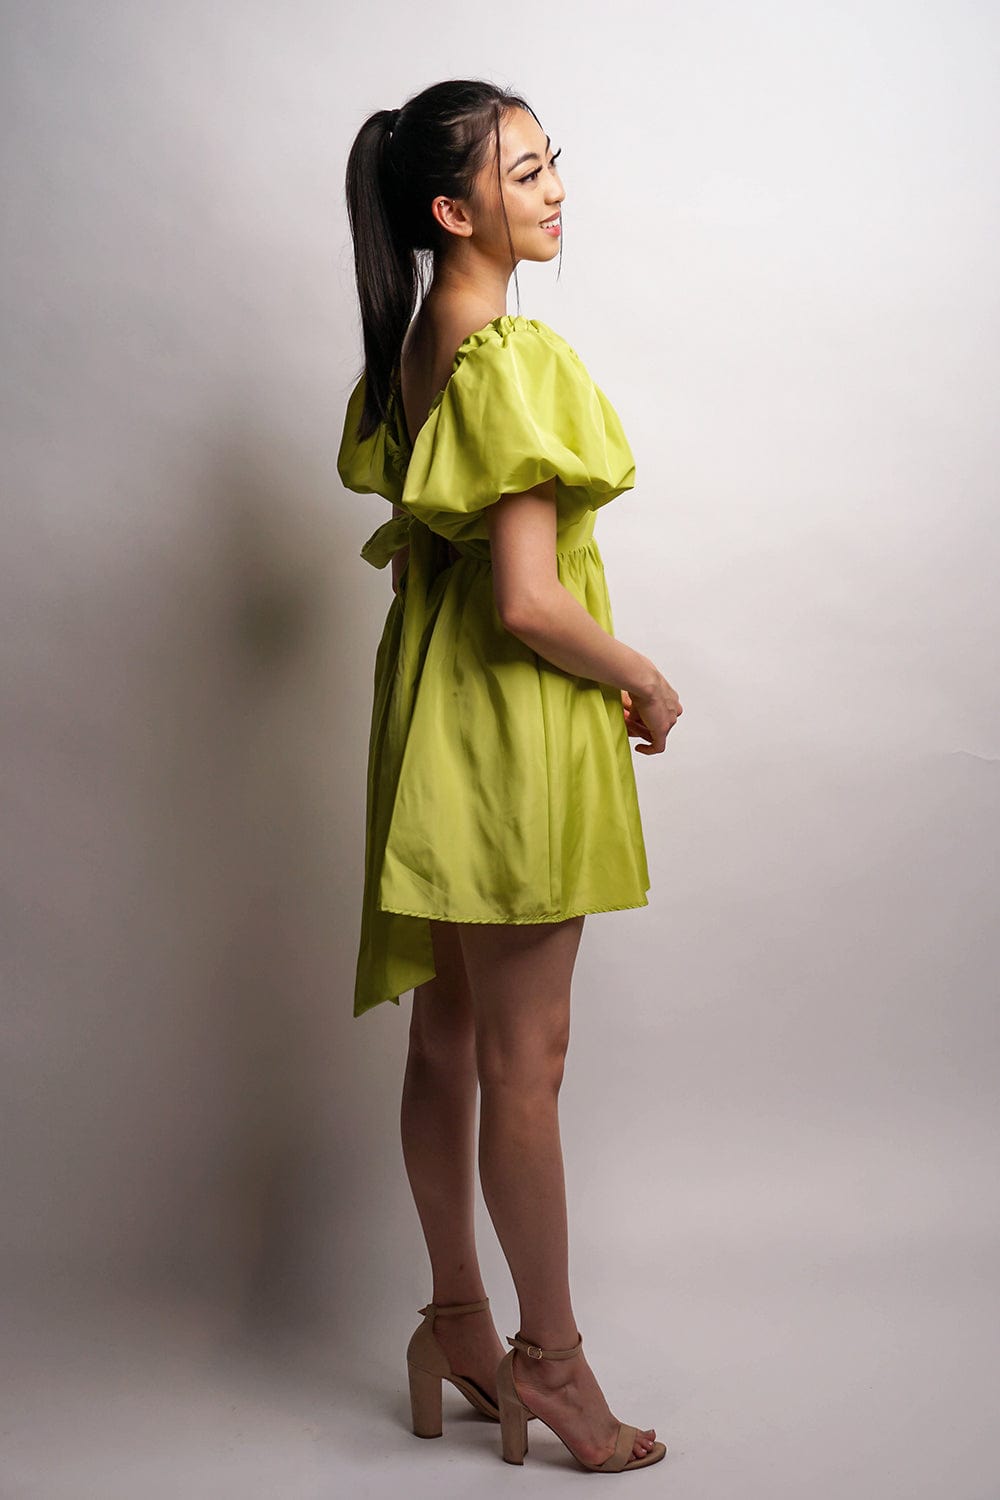 DCD DRESSES Lime Green Puff Sleeves Taffeta Dress